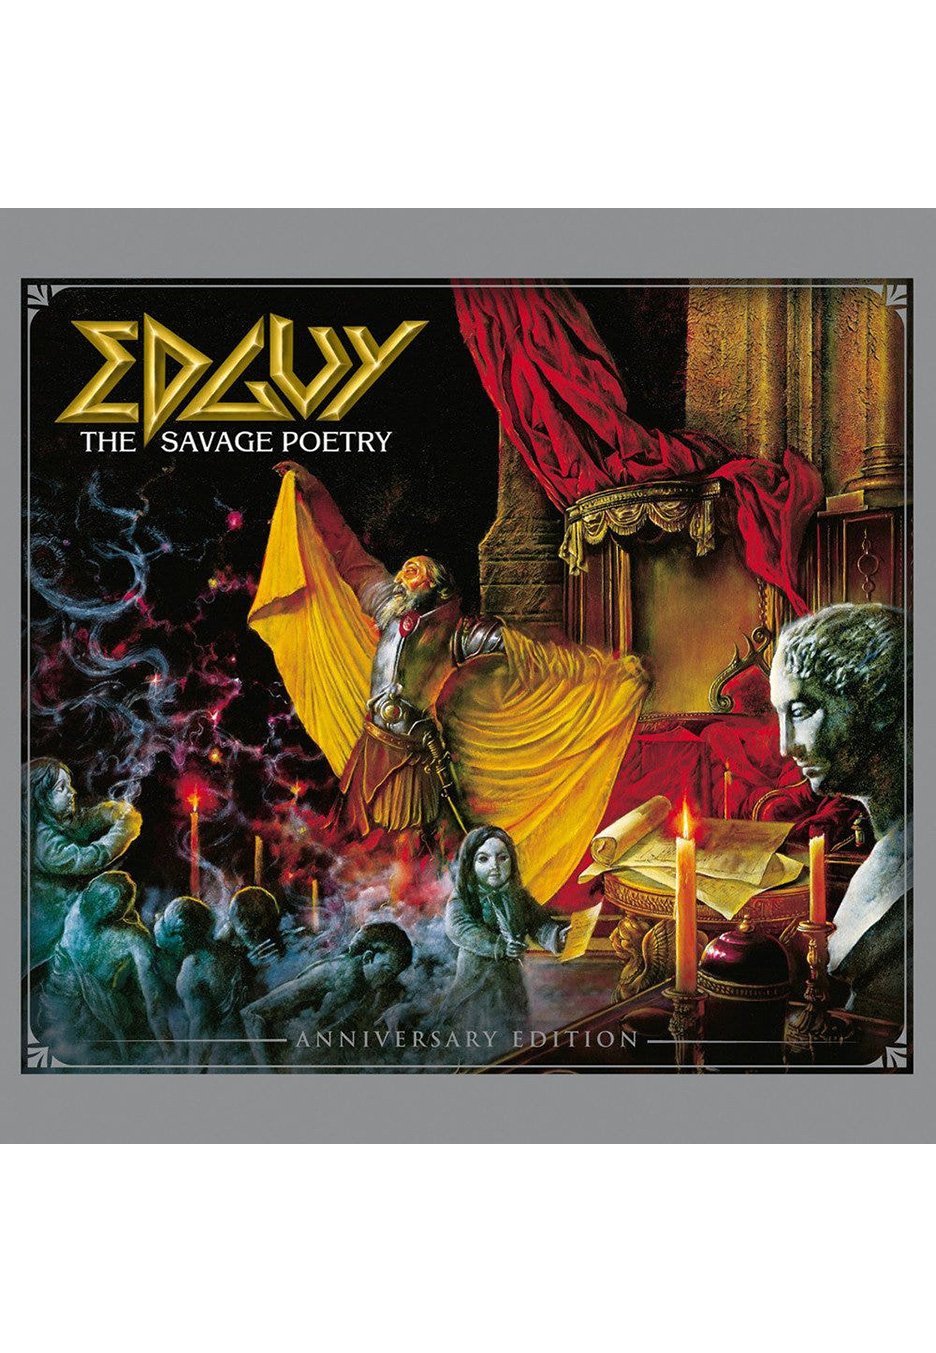 Edguy - The Savage Poetry Anniv. Edition - Vinyl